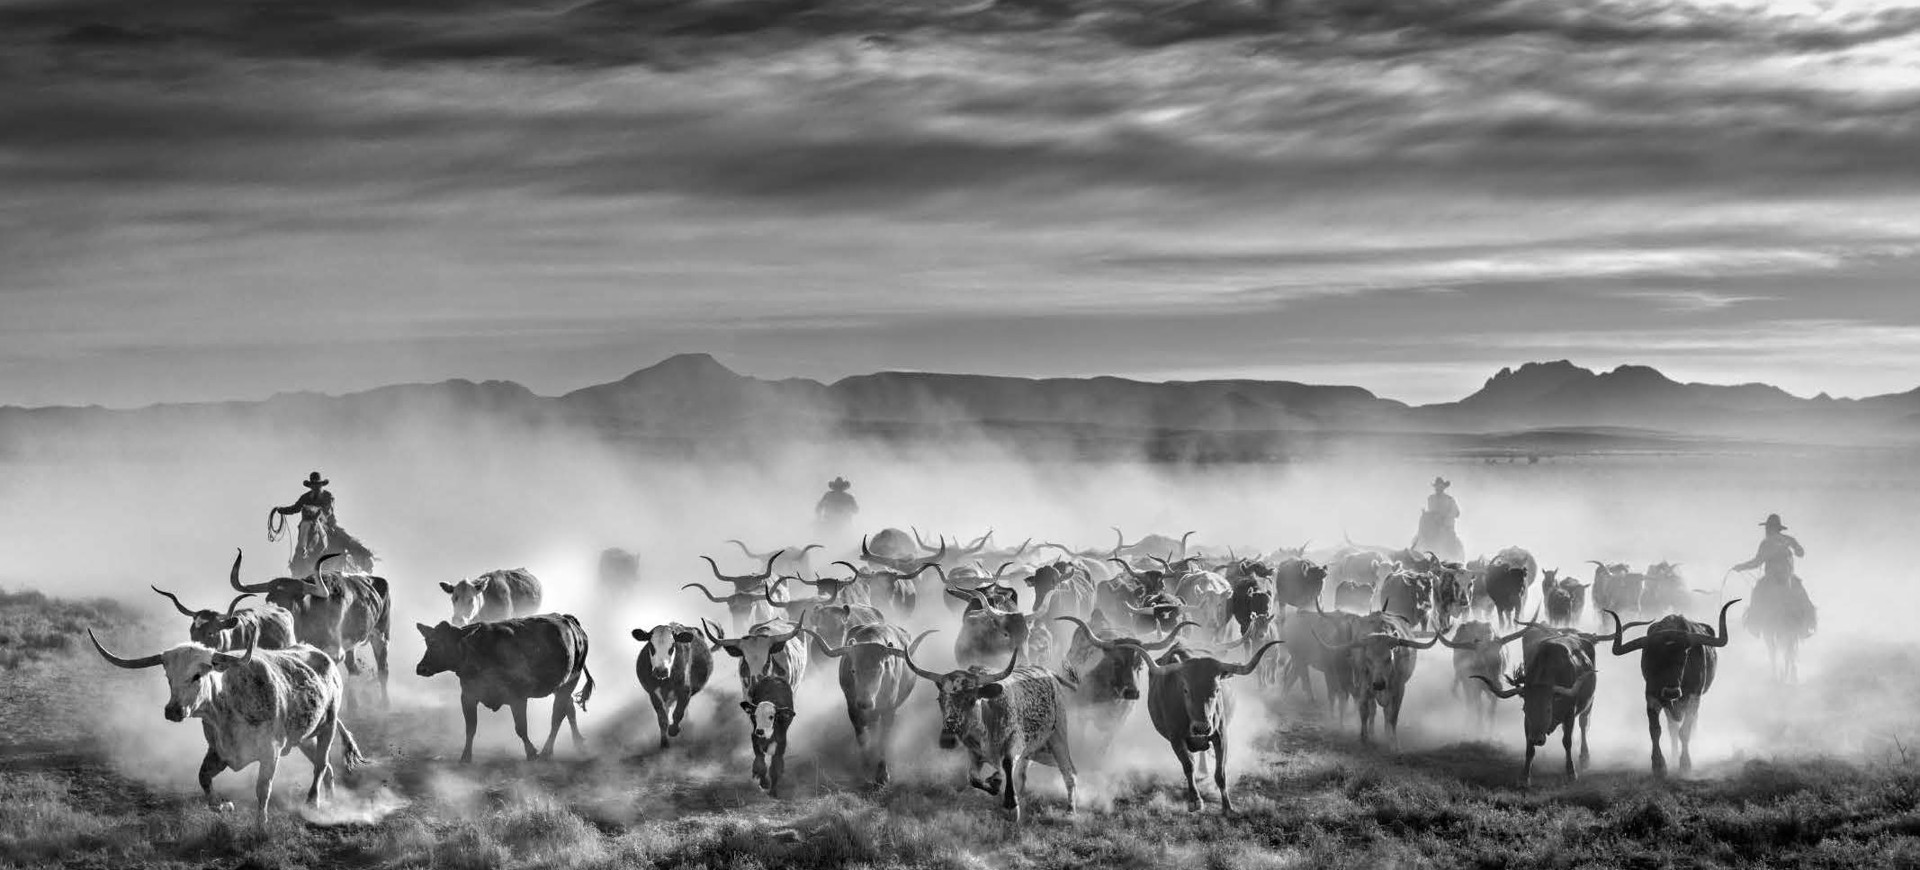 The Thundering Herd by David Yarrow